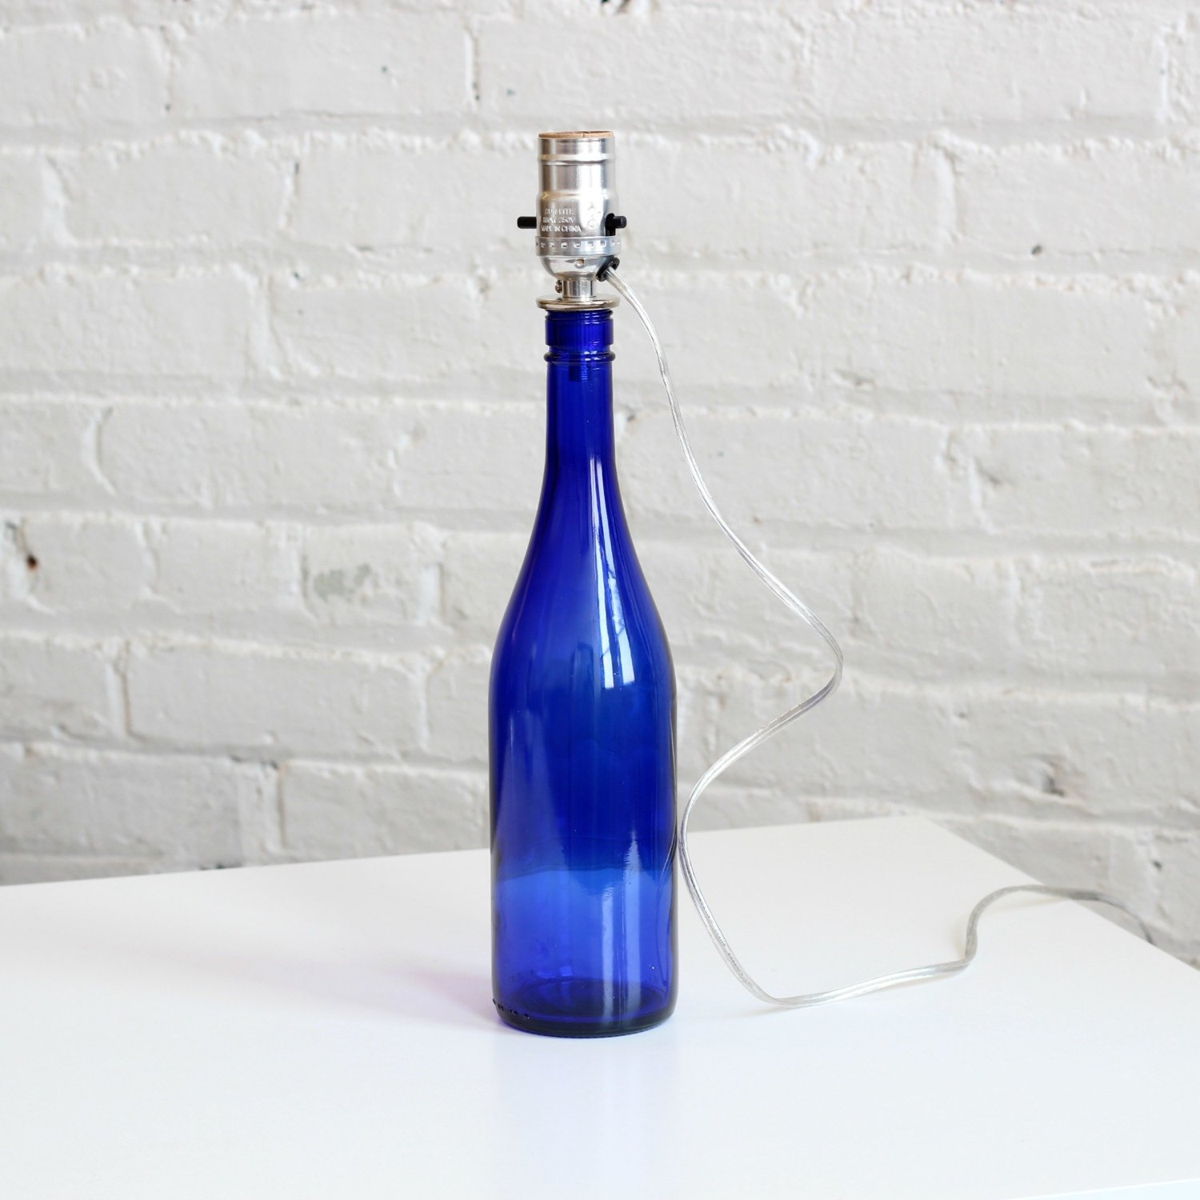 DIY Bottle Crafts - How To Make A Bottle Lamp Resources